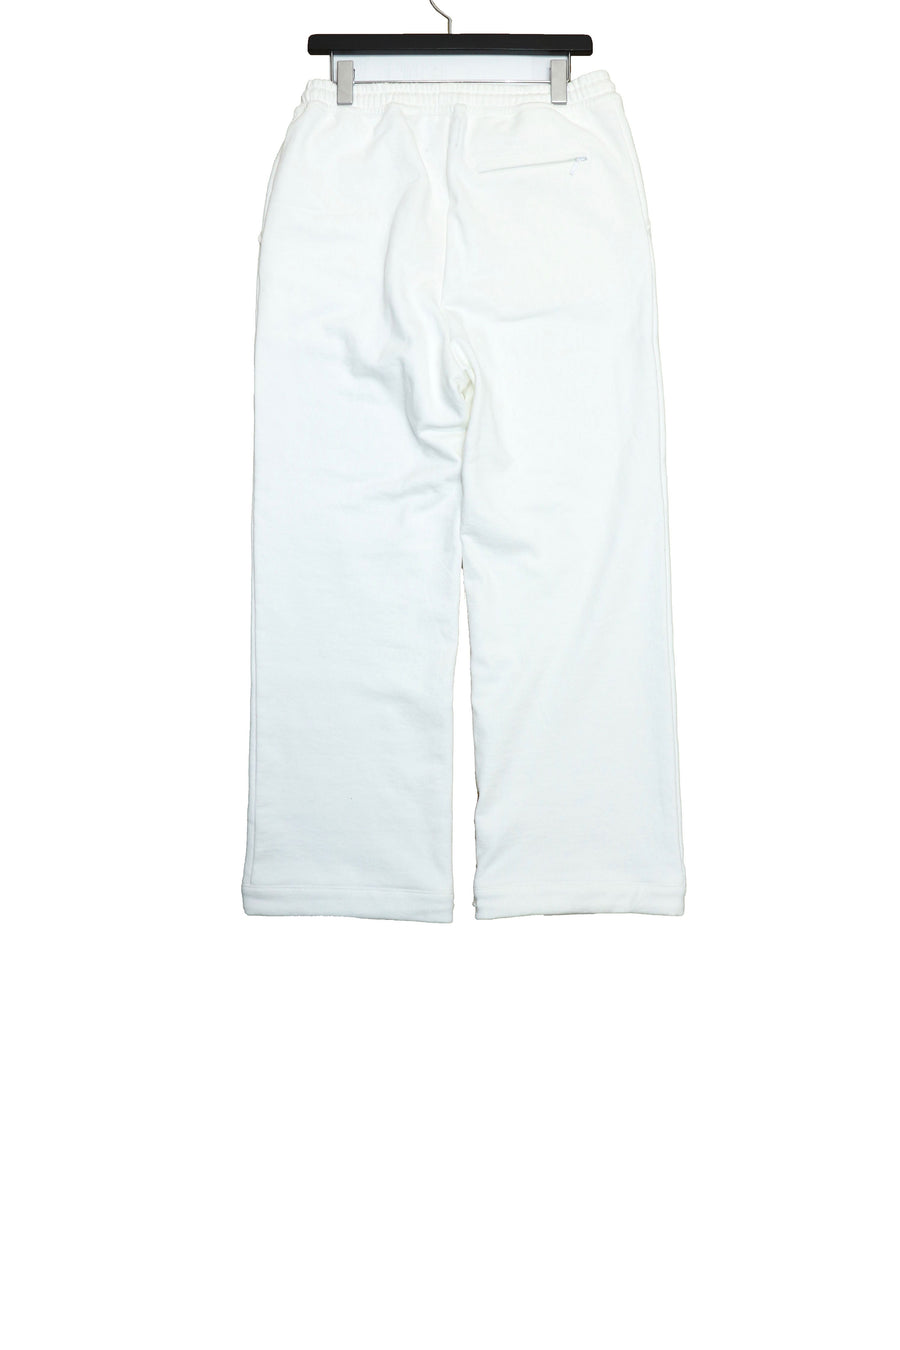 Taiga Igari  French Sweat Pants(WHITE)